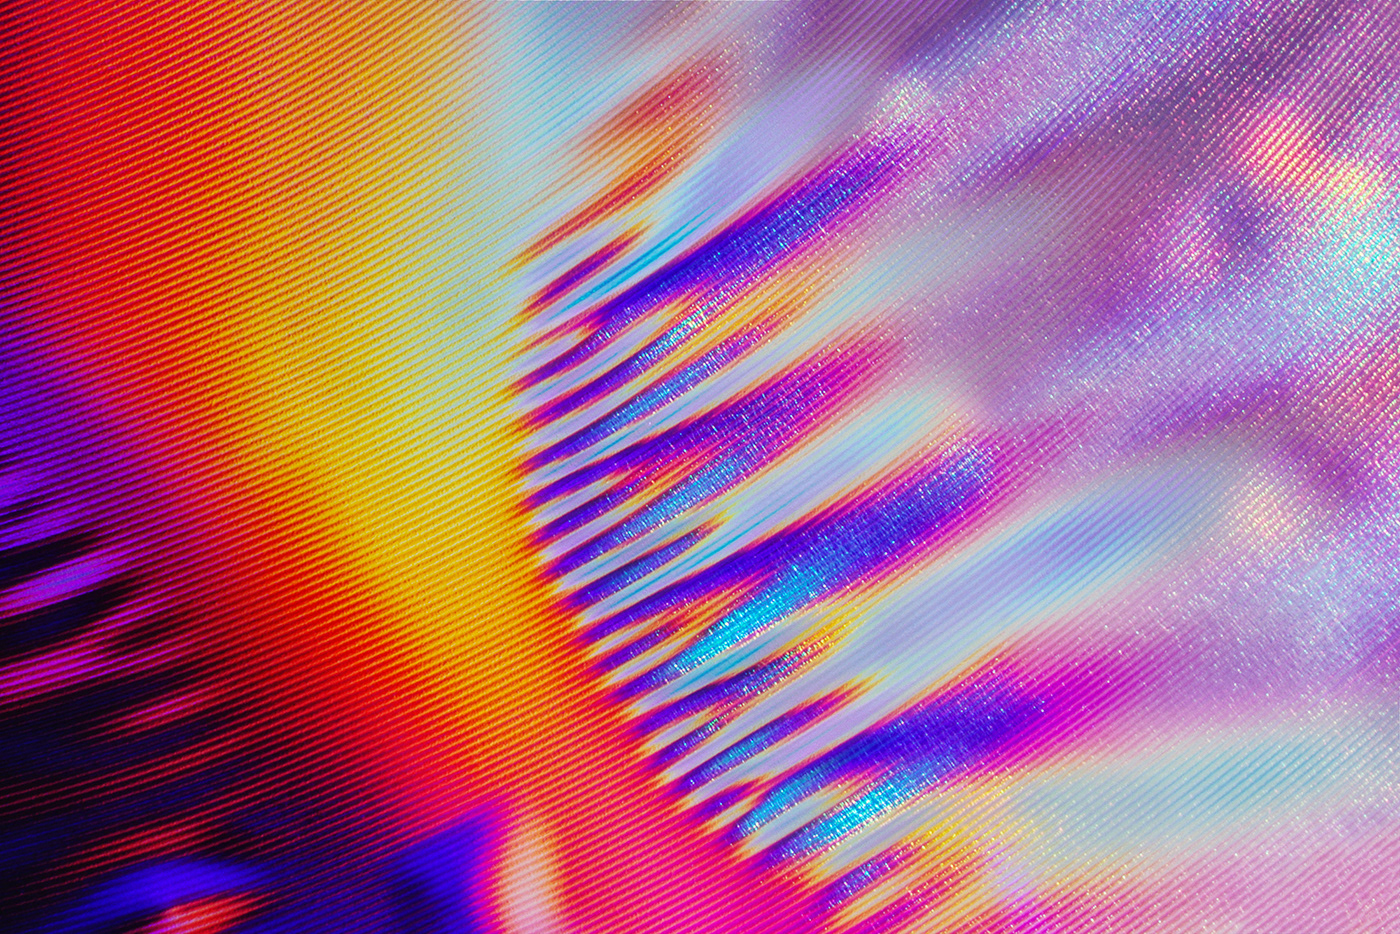 Photography  cd rainbow color glow abstract art wallpaper sonya7r2 photo